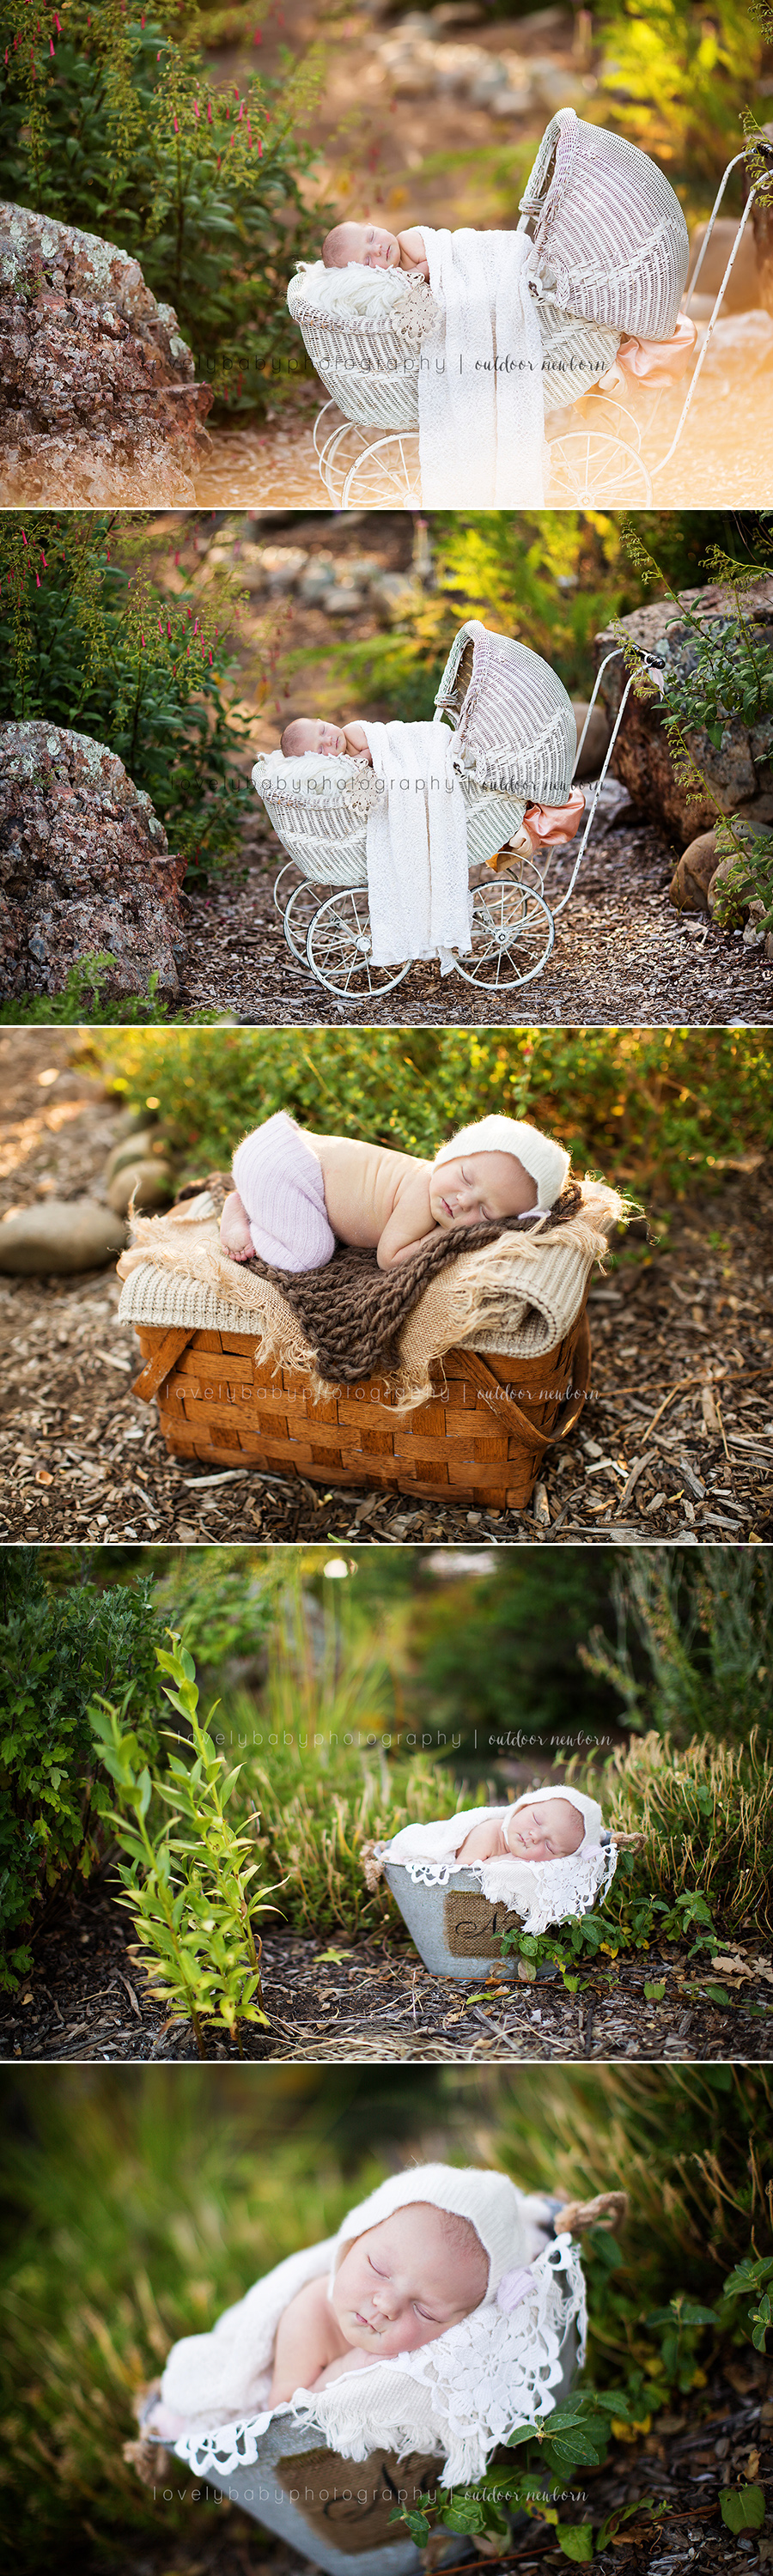 sacramento outdoor newborn photographer